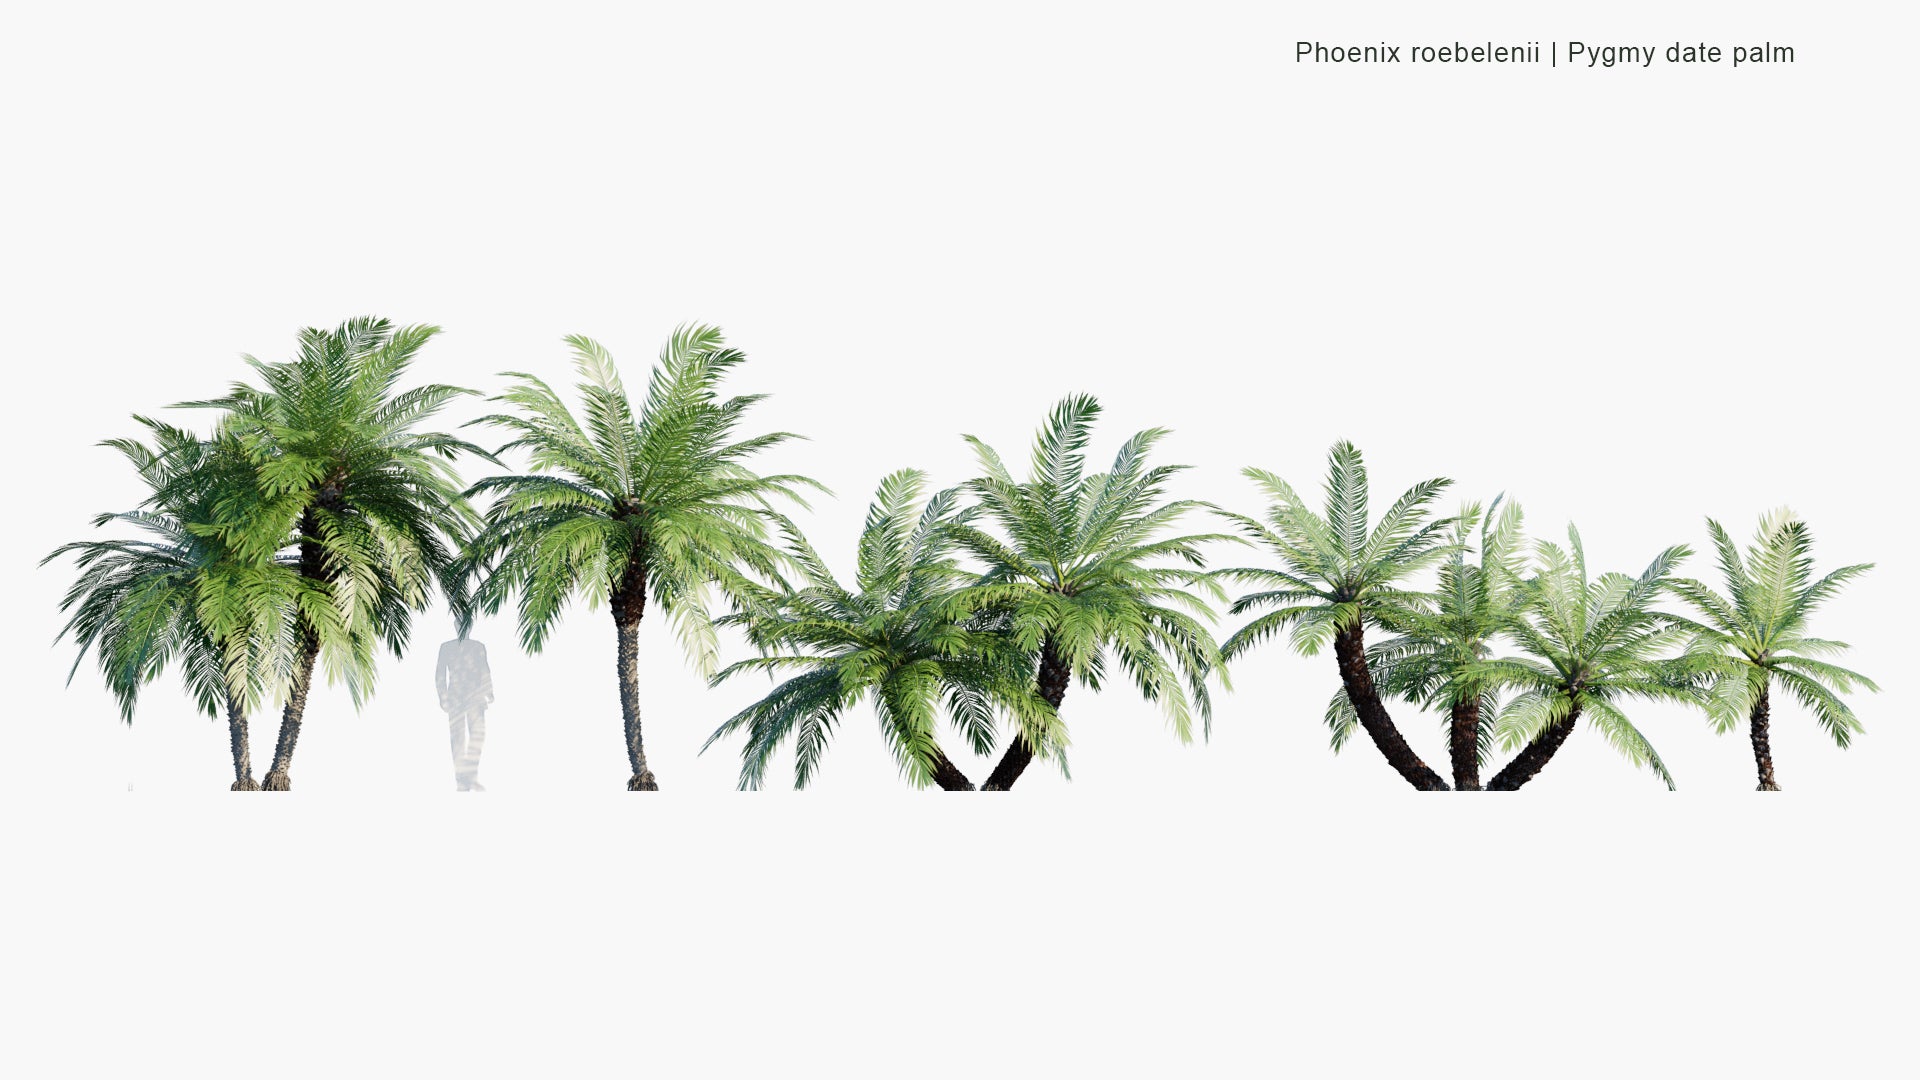 Low Poly Phoenix Roebelenii - Dwarf Date Palm, Pygmy Date Palm, Miniature Date Palm (3D Model)